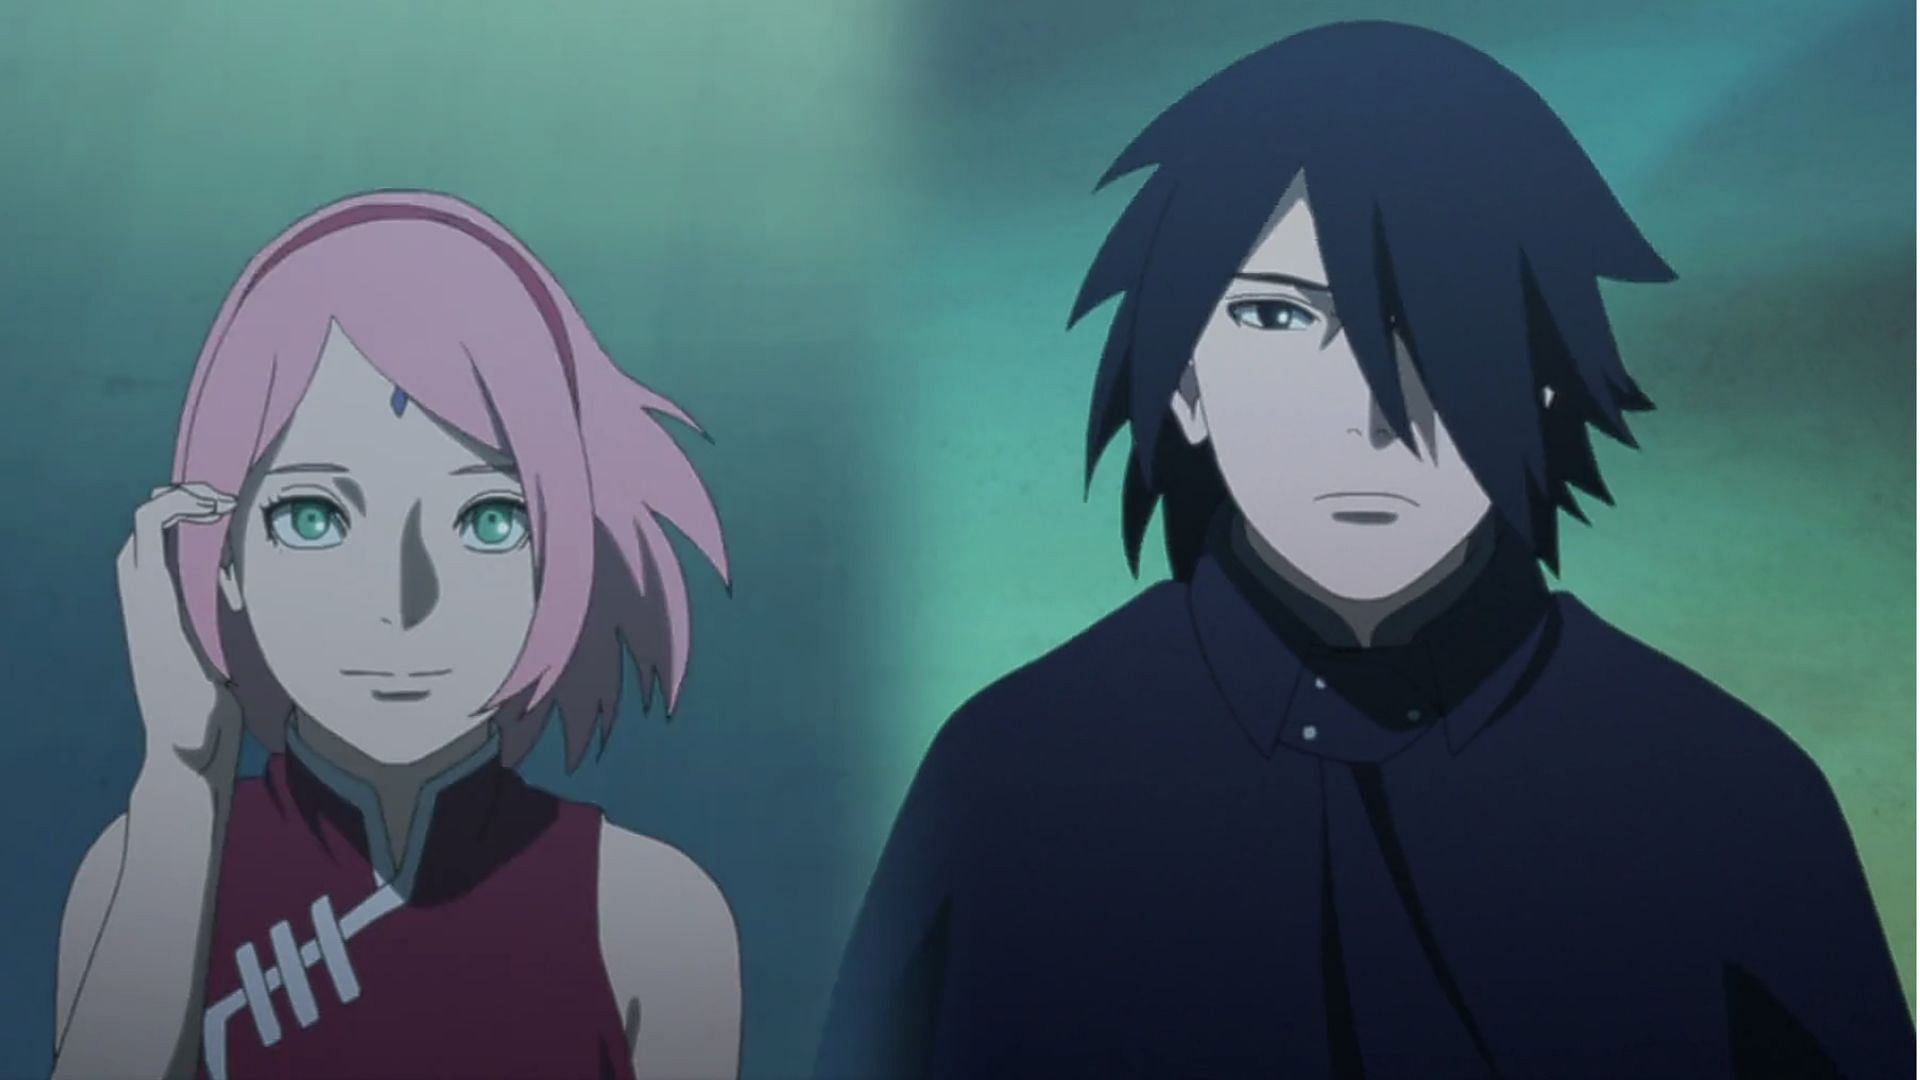 Sakura and Sasuke (Image via Studio Pierrot)